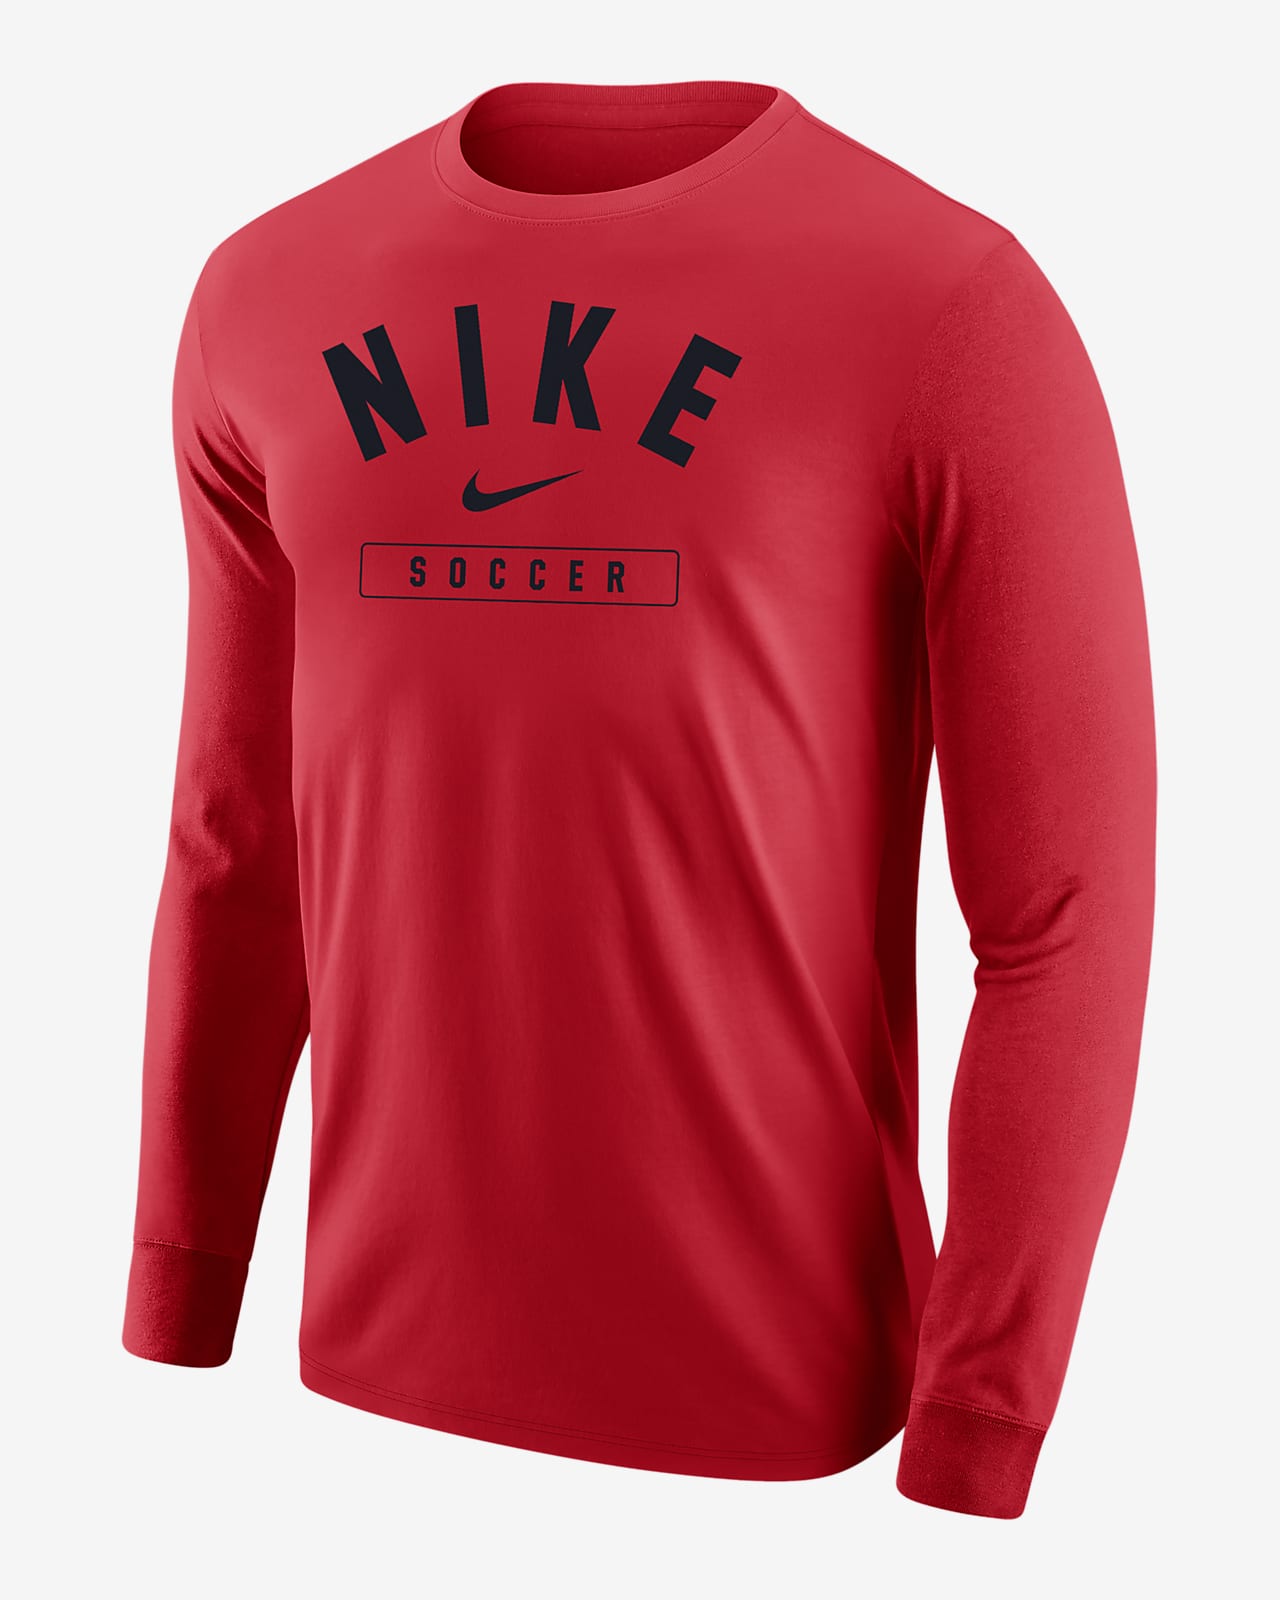 Nike Swoosh Men's Soccer Long-Sleeve T-Shirt